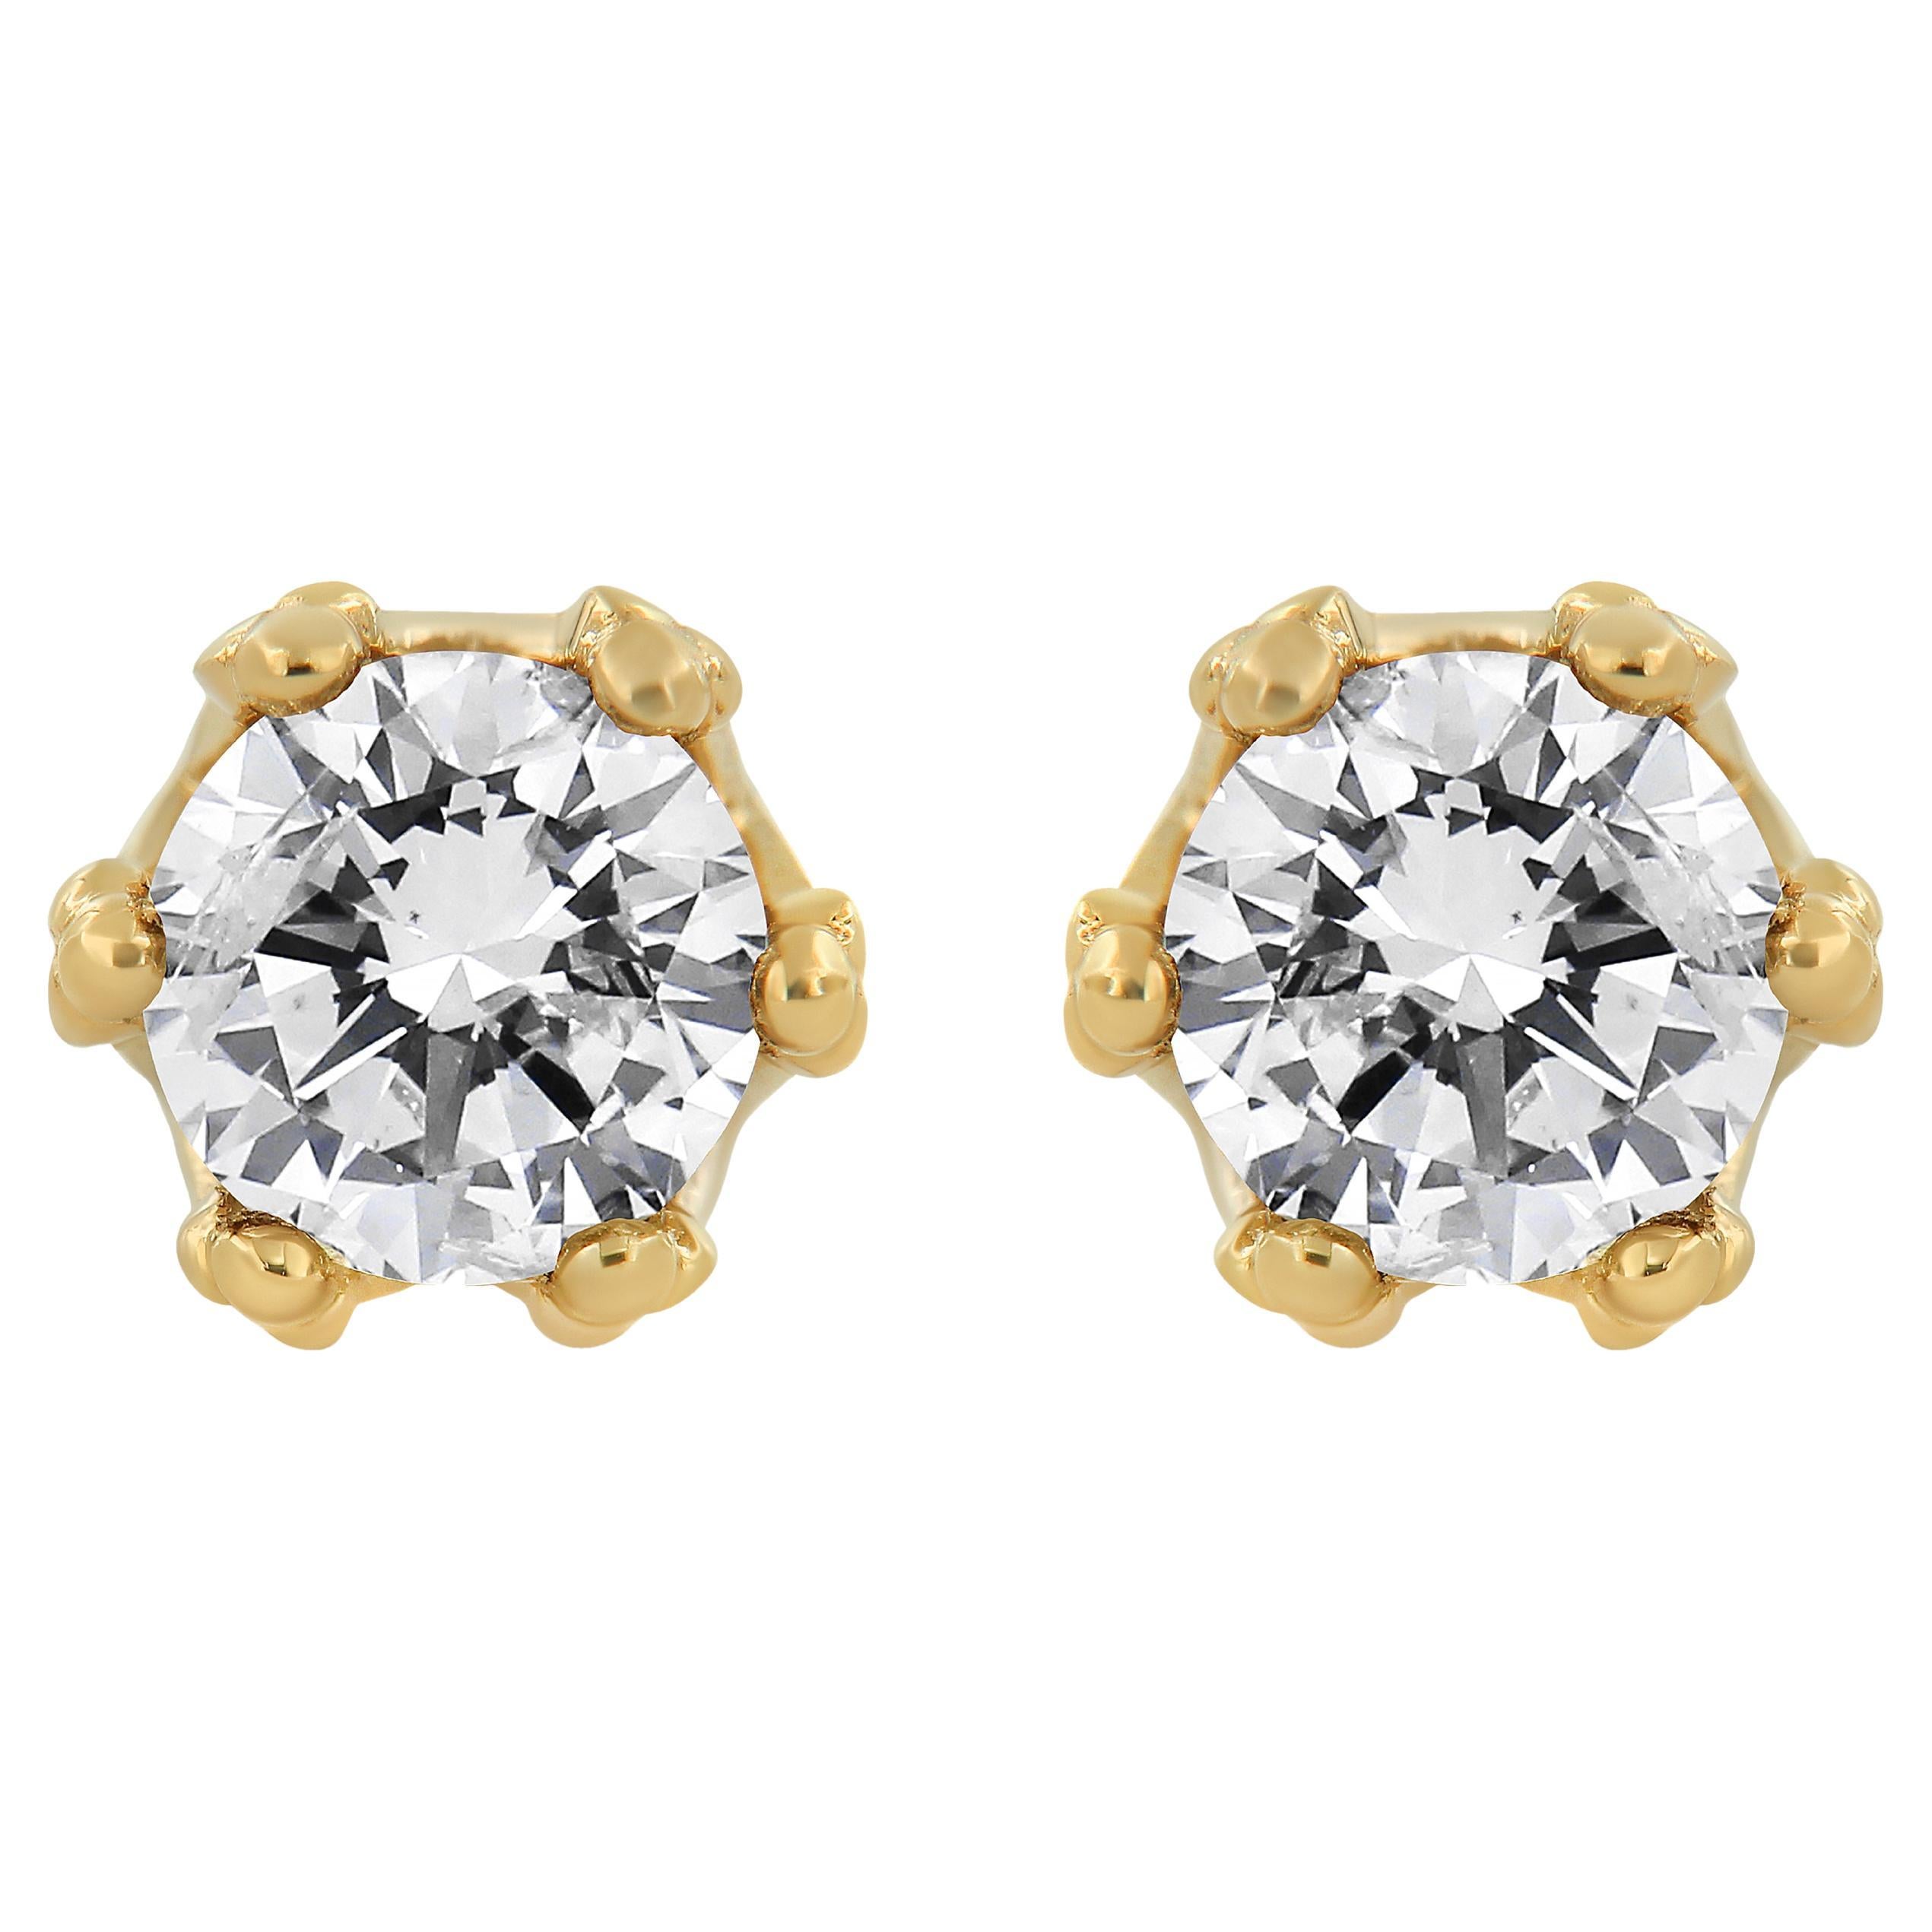 14K Yellow Gold 2.0 Carat Round Diamond Crown Hidden Halo Stud Earrings